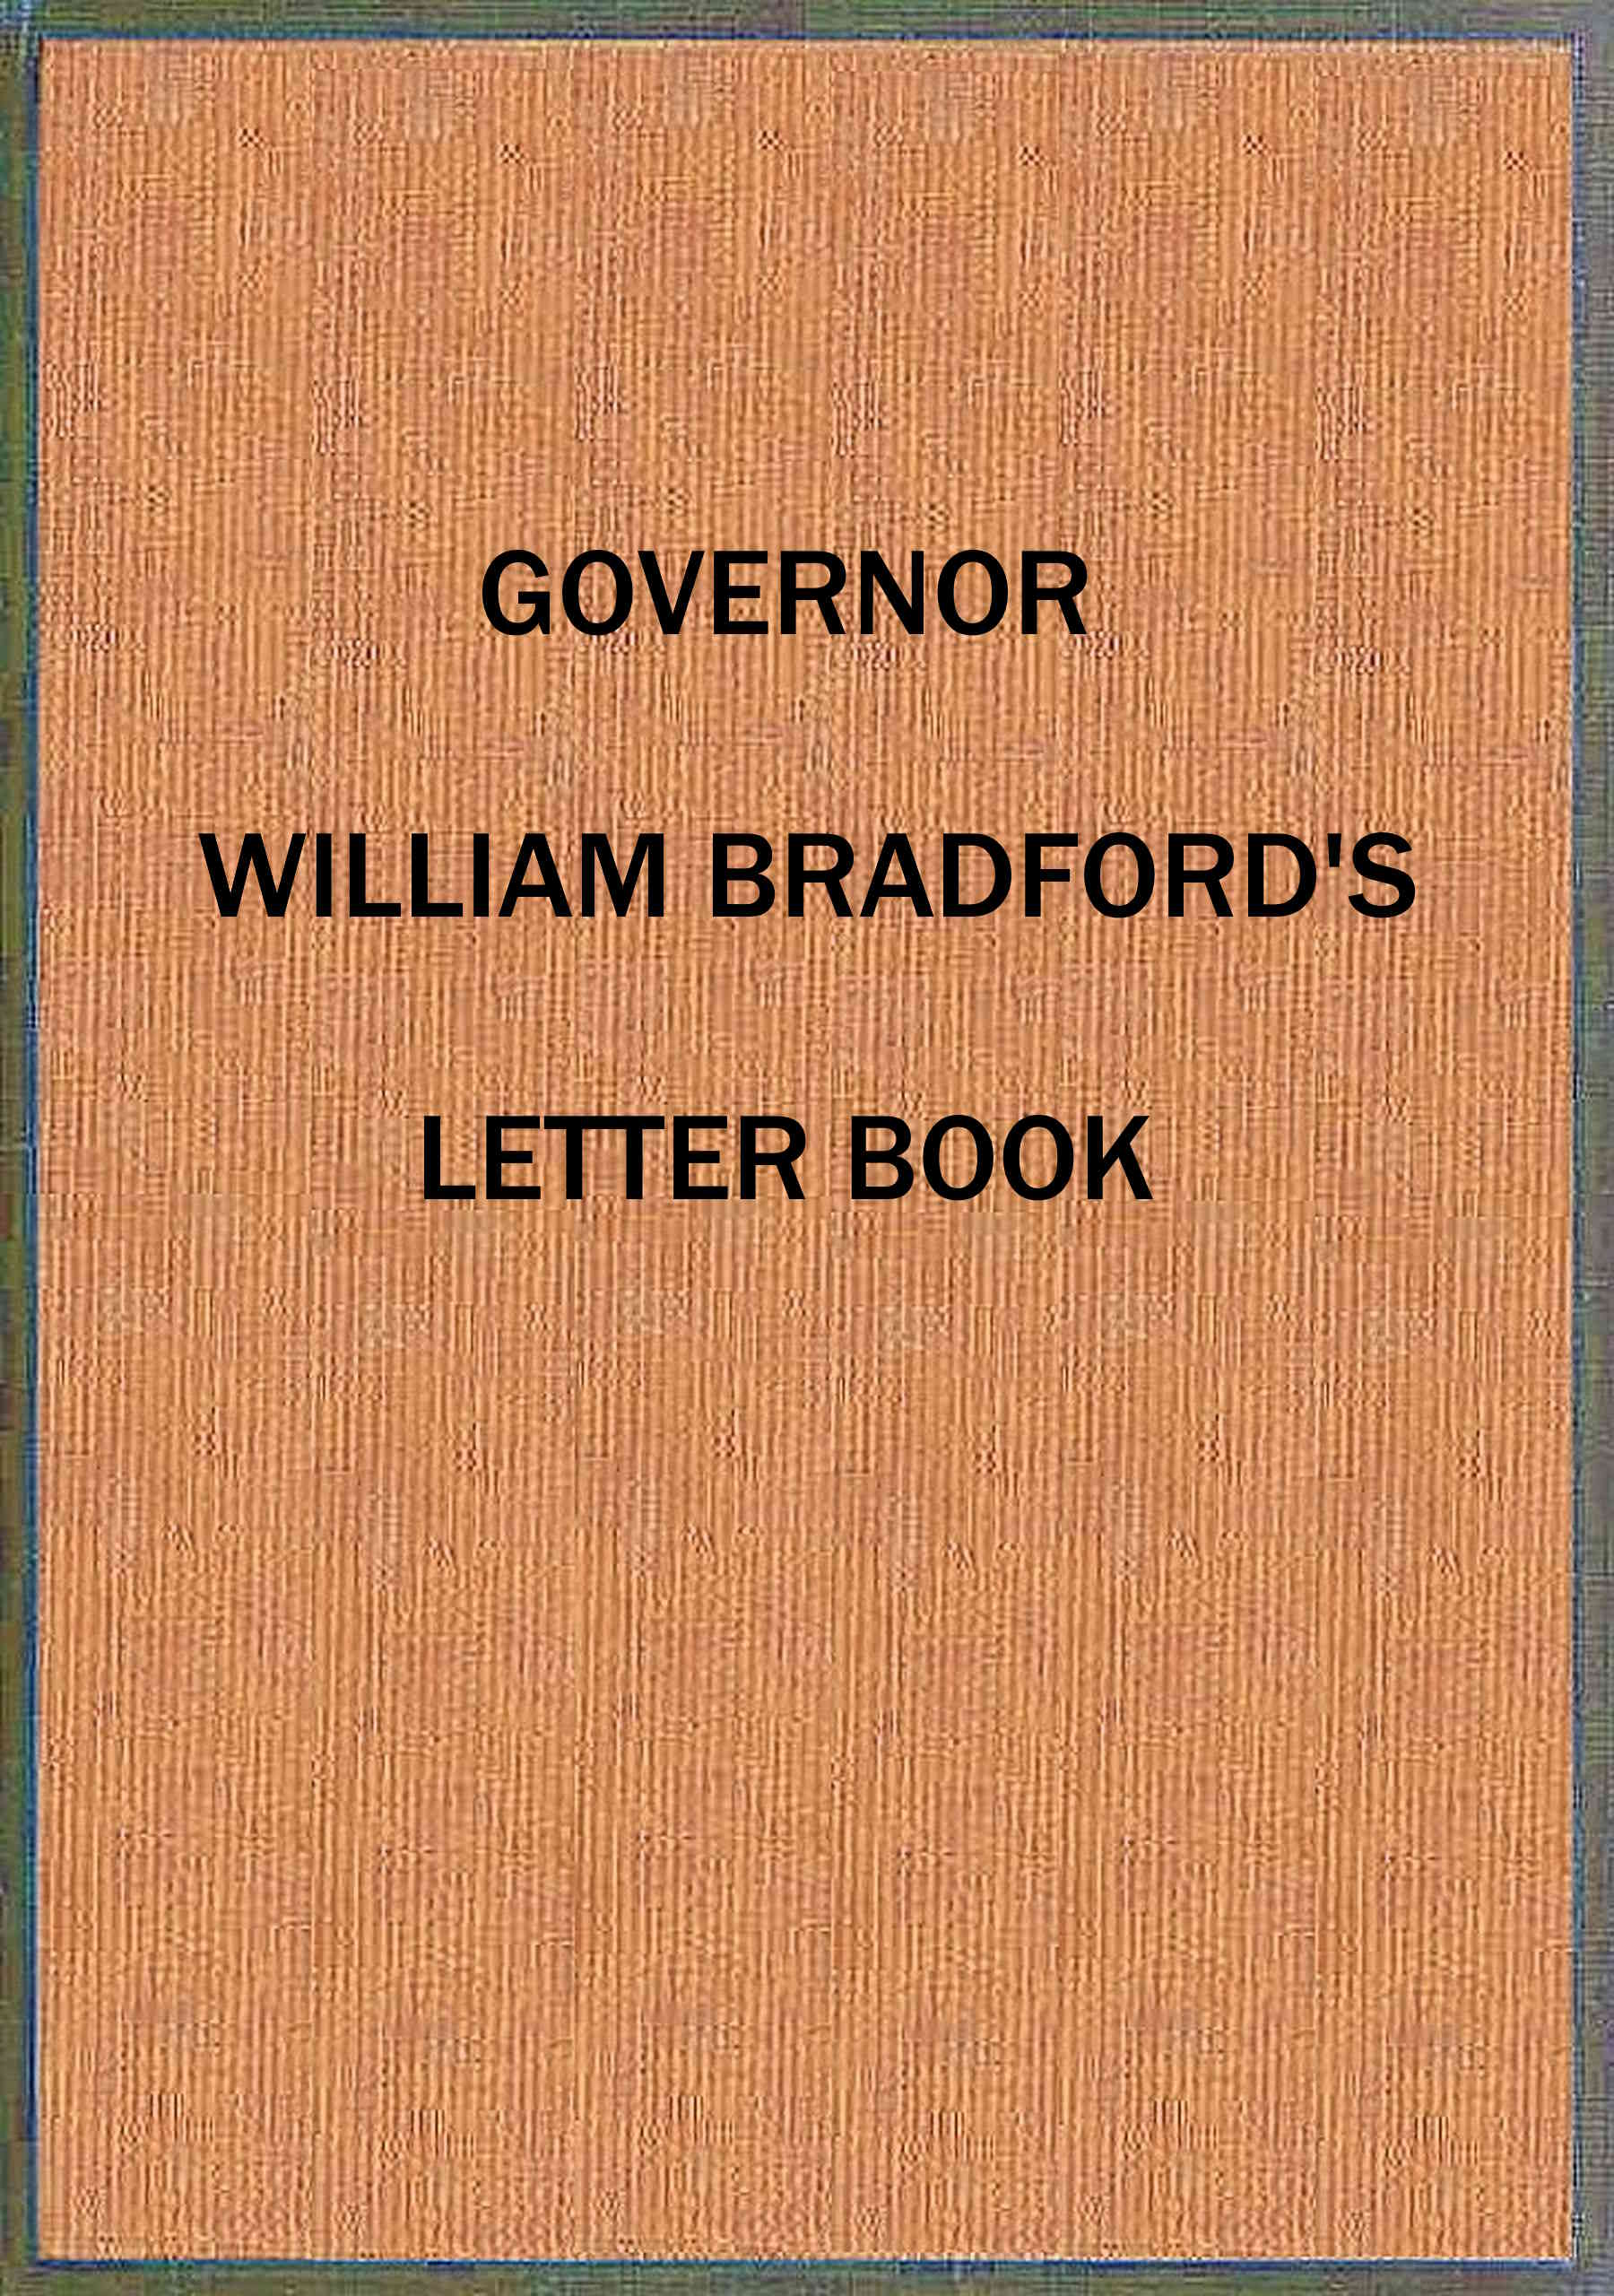 Governor William Bradford's letter book